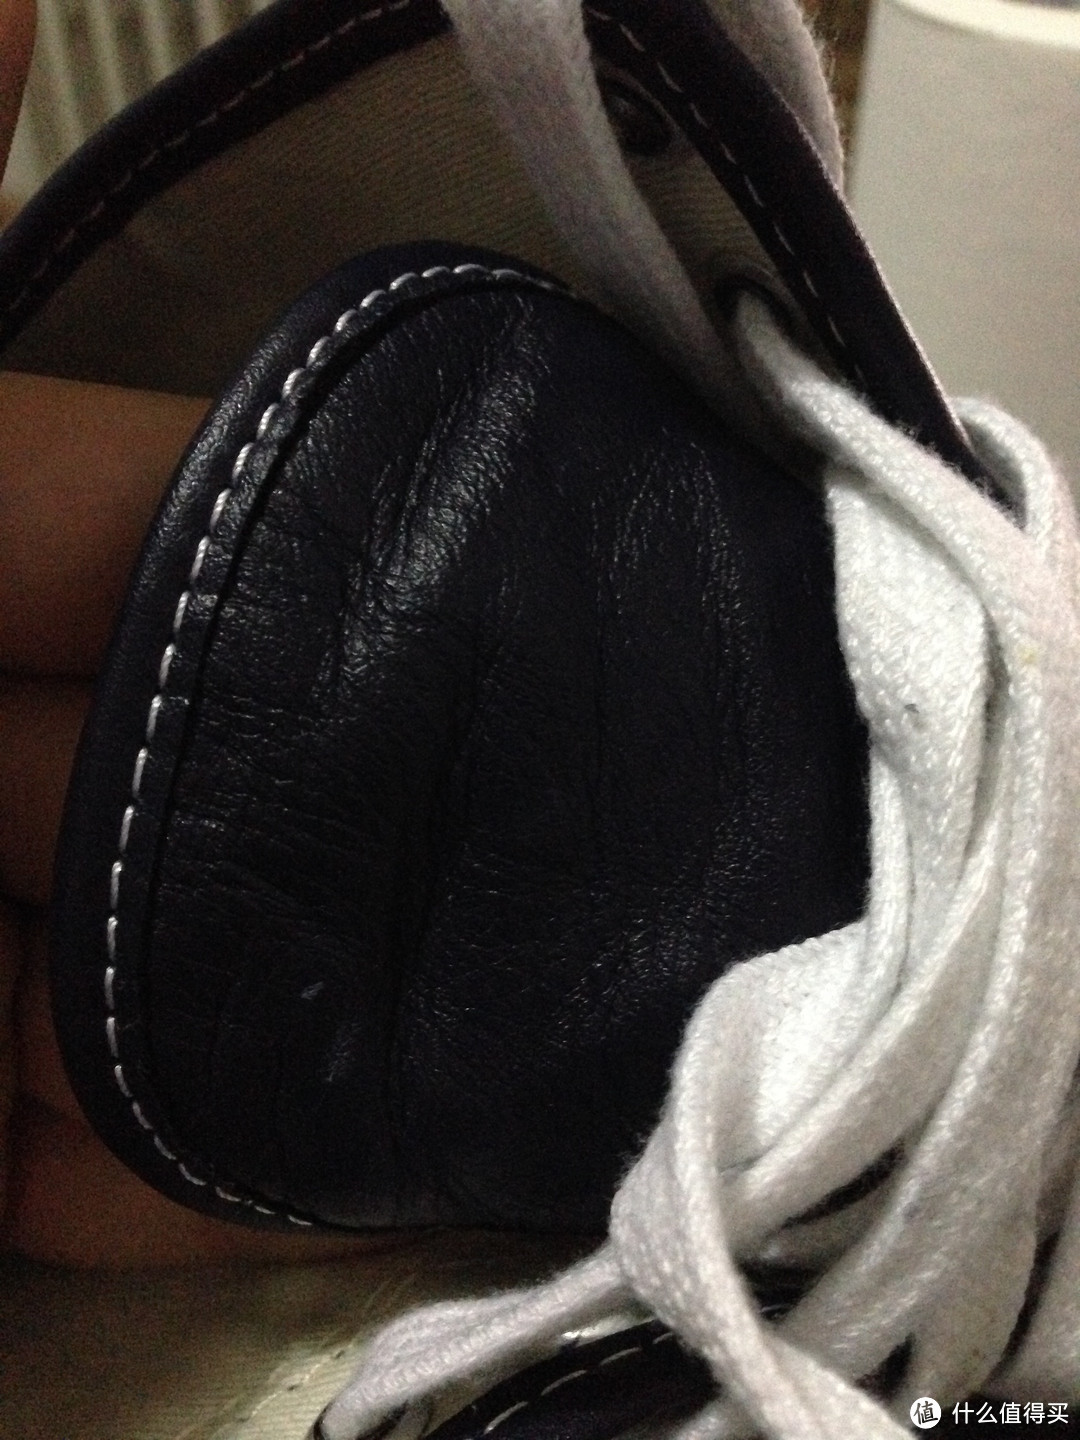 PF Flyers Center Hi - Premium Leather 皮质帆布鞋